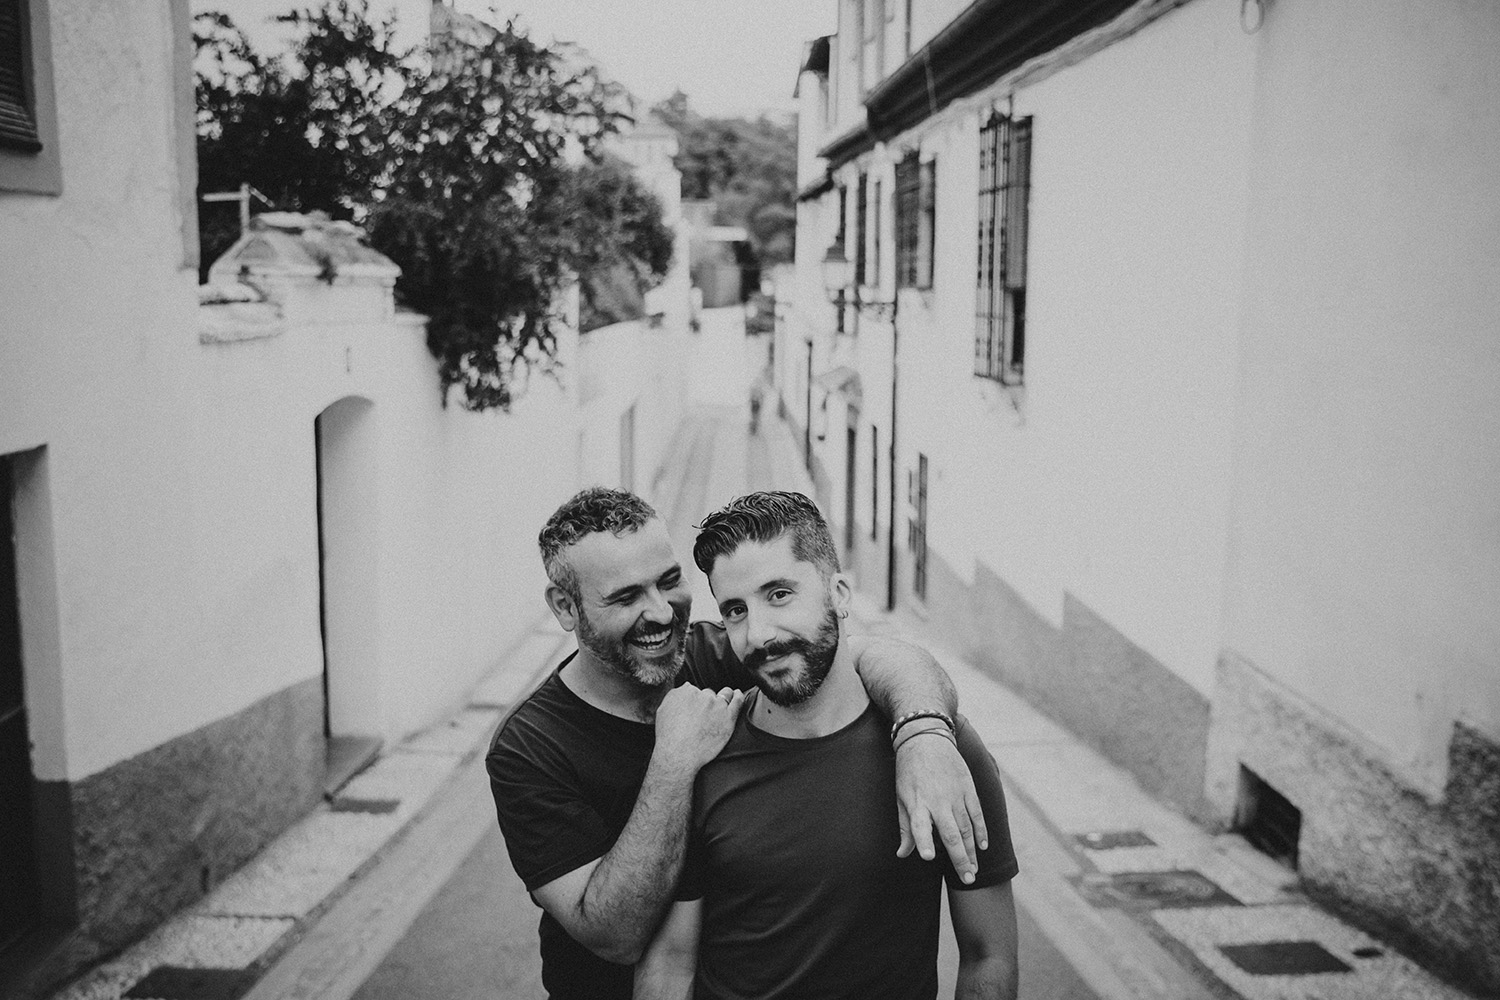 preboda-granada-serrallo-fotografo-boda-lgtb-gay-Jose_Reyes-15.jpg